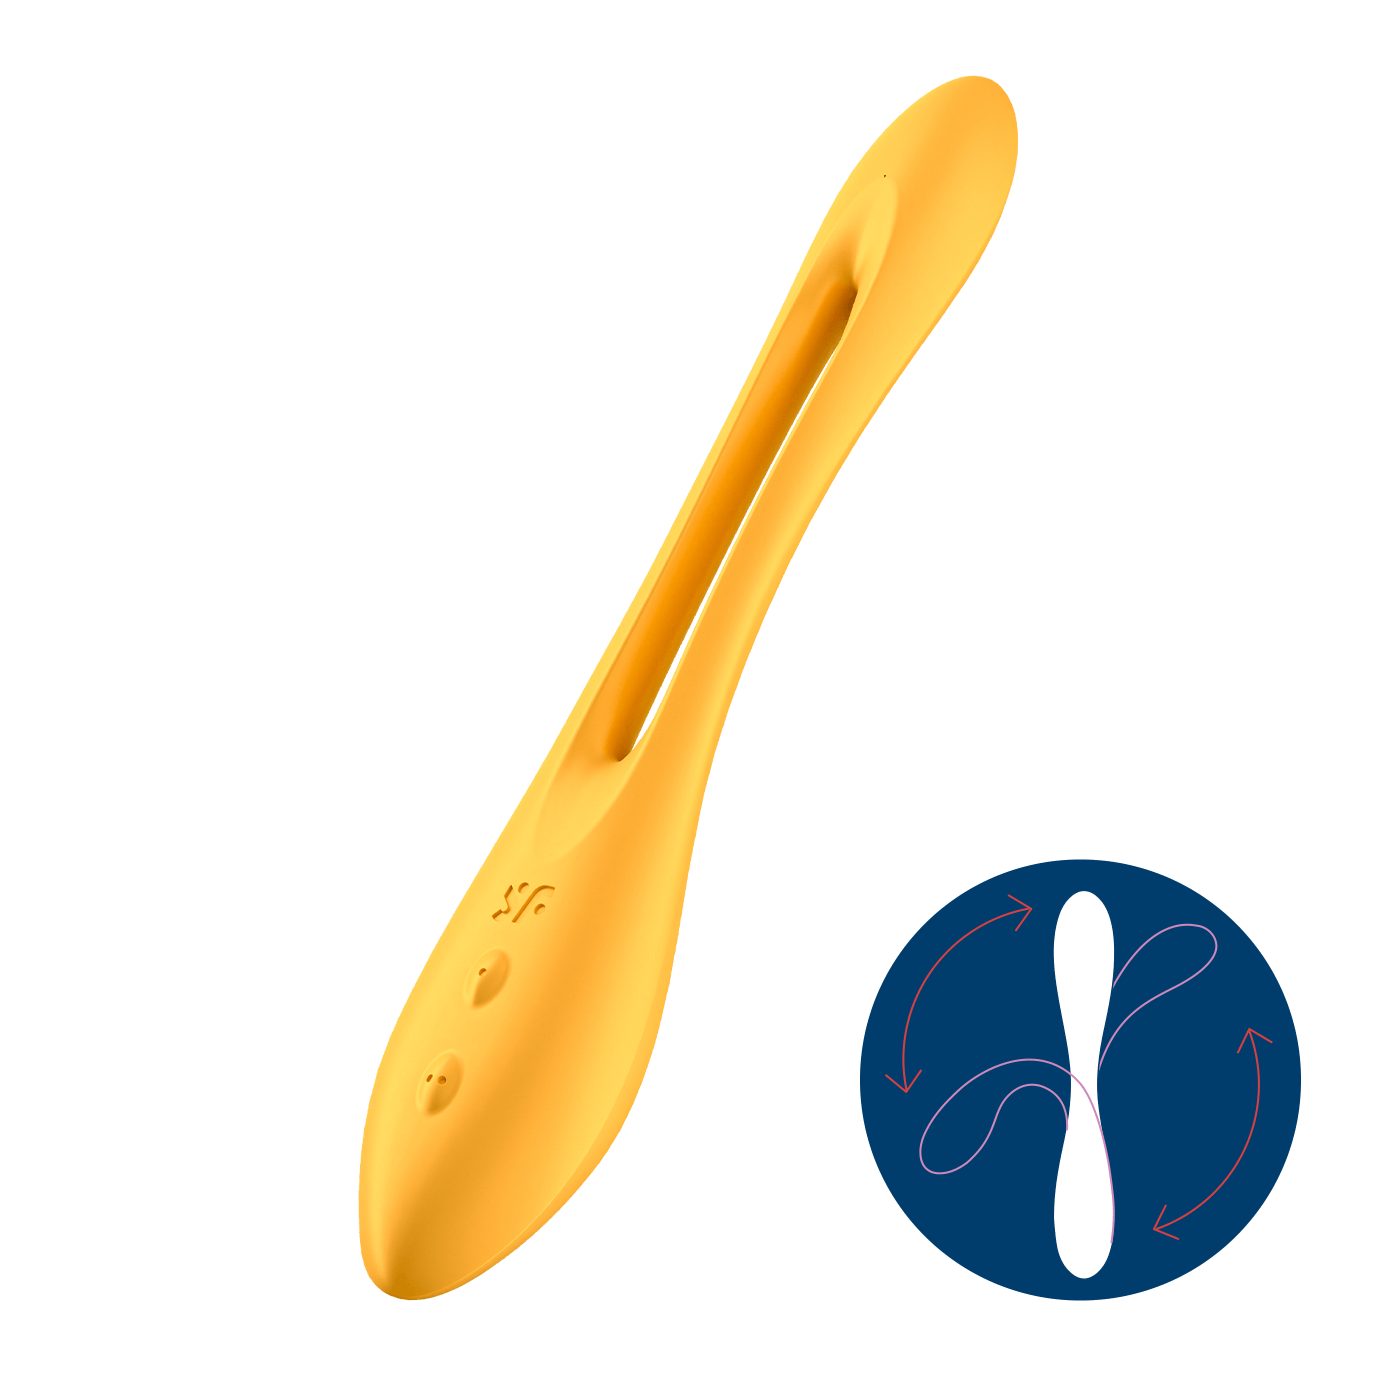 Satisfyer Klitoris-Stimulator Satisfyer wasserdicht gelb - Multifunktionen Joy' Vibrator (IPX7) 'Elastic